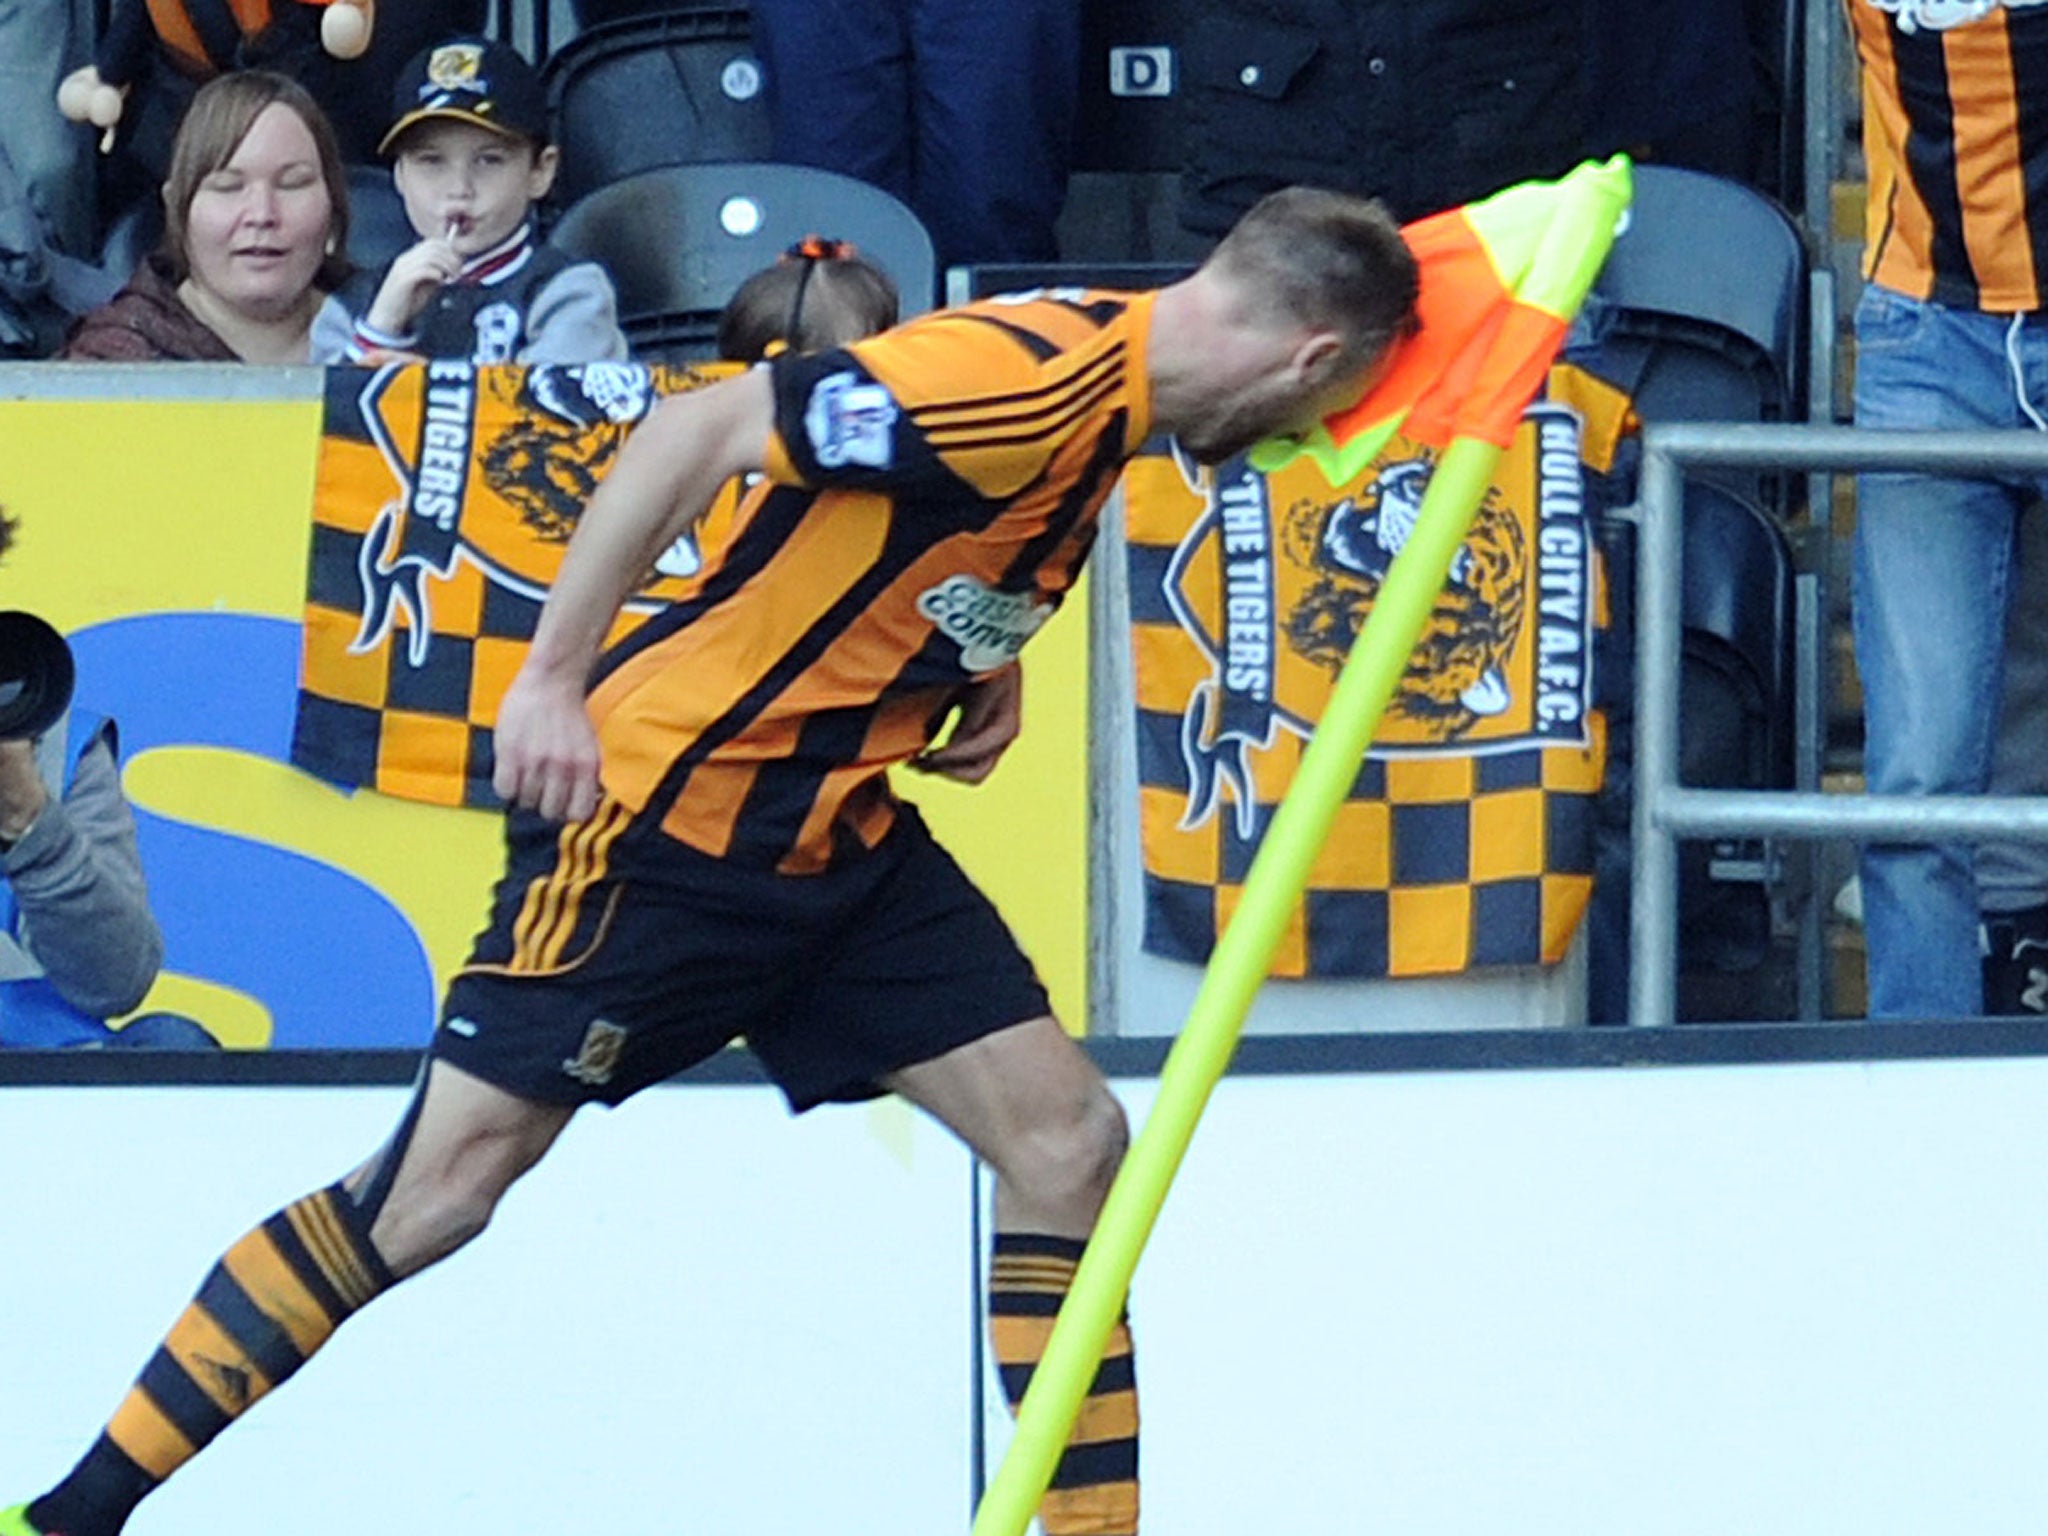 Hull's David Meyler celebrates his goal by headbutting the corner flag